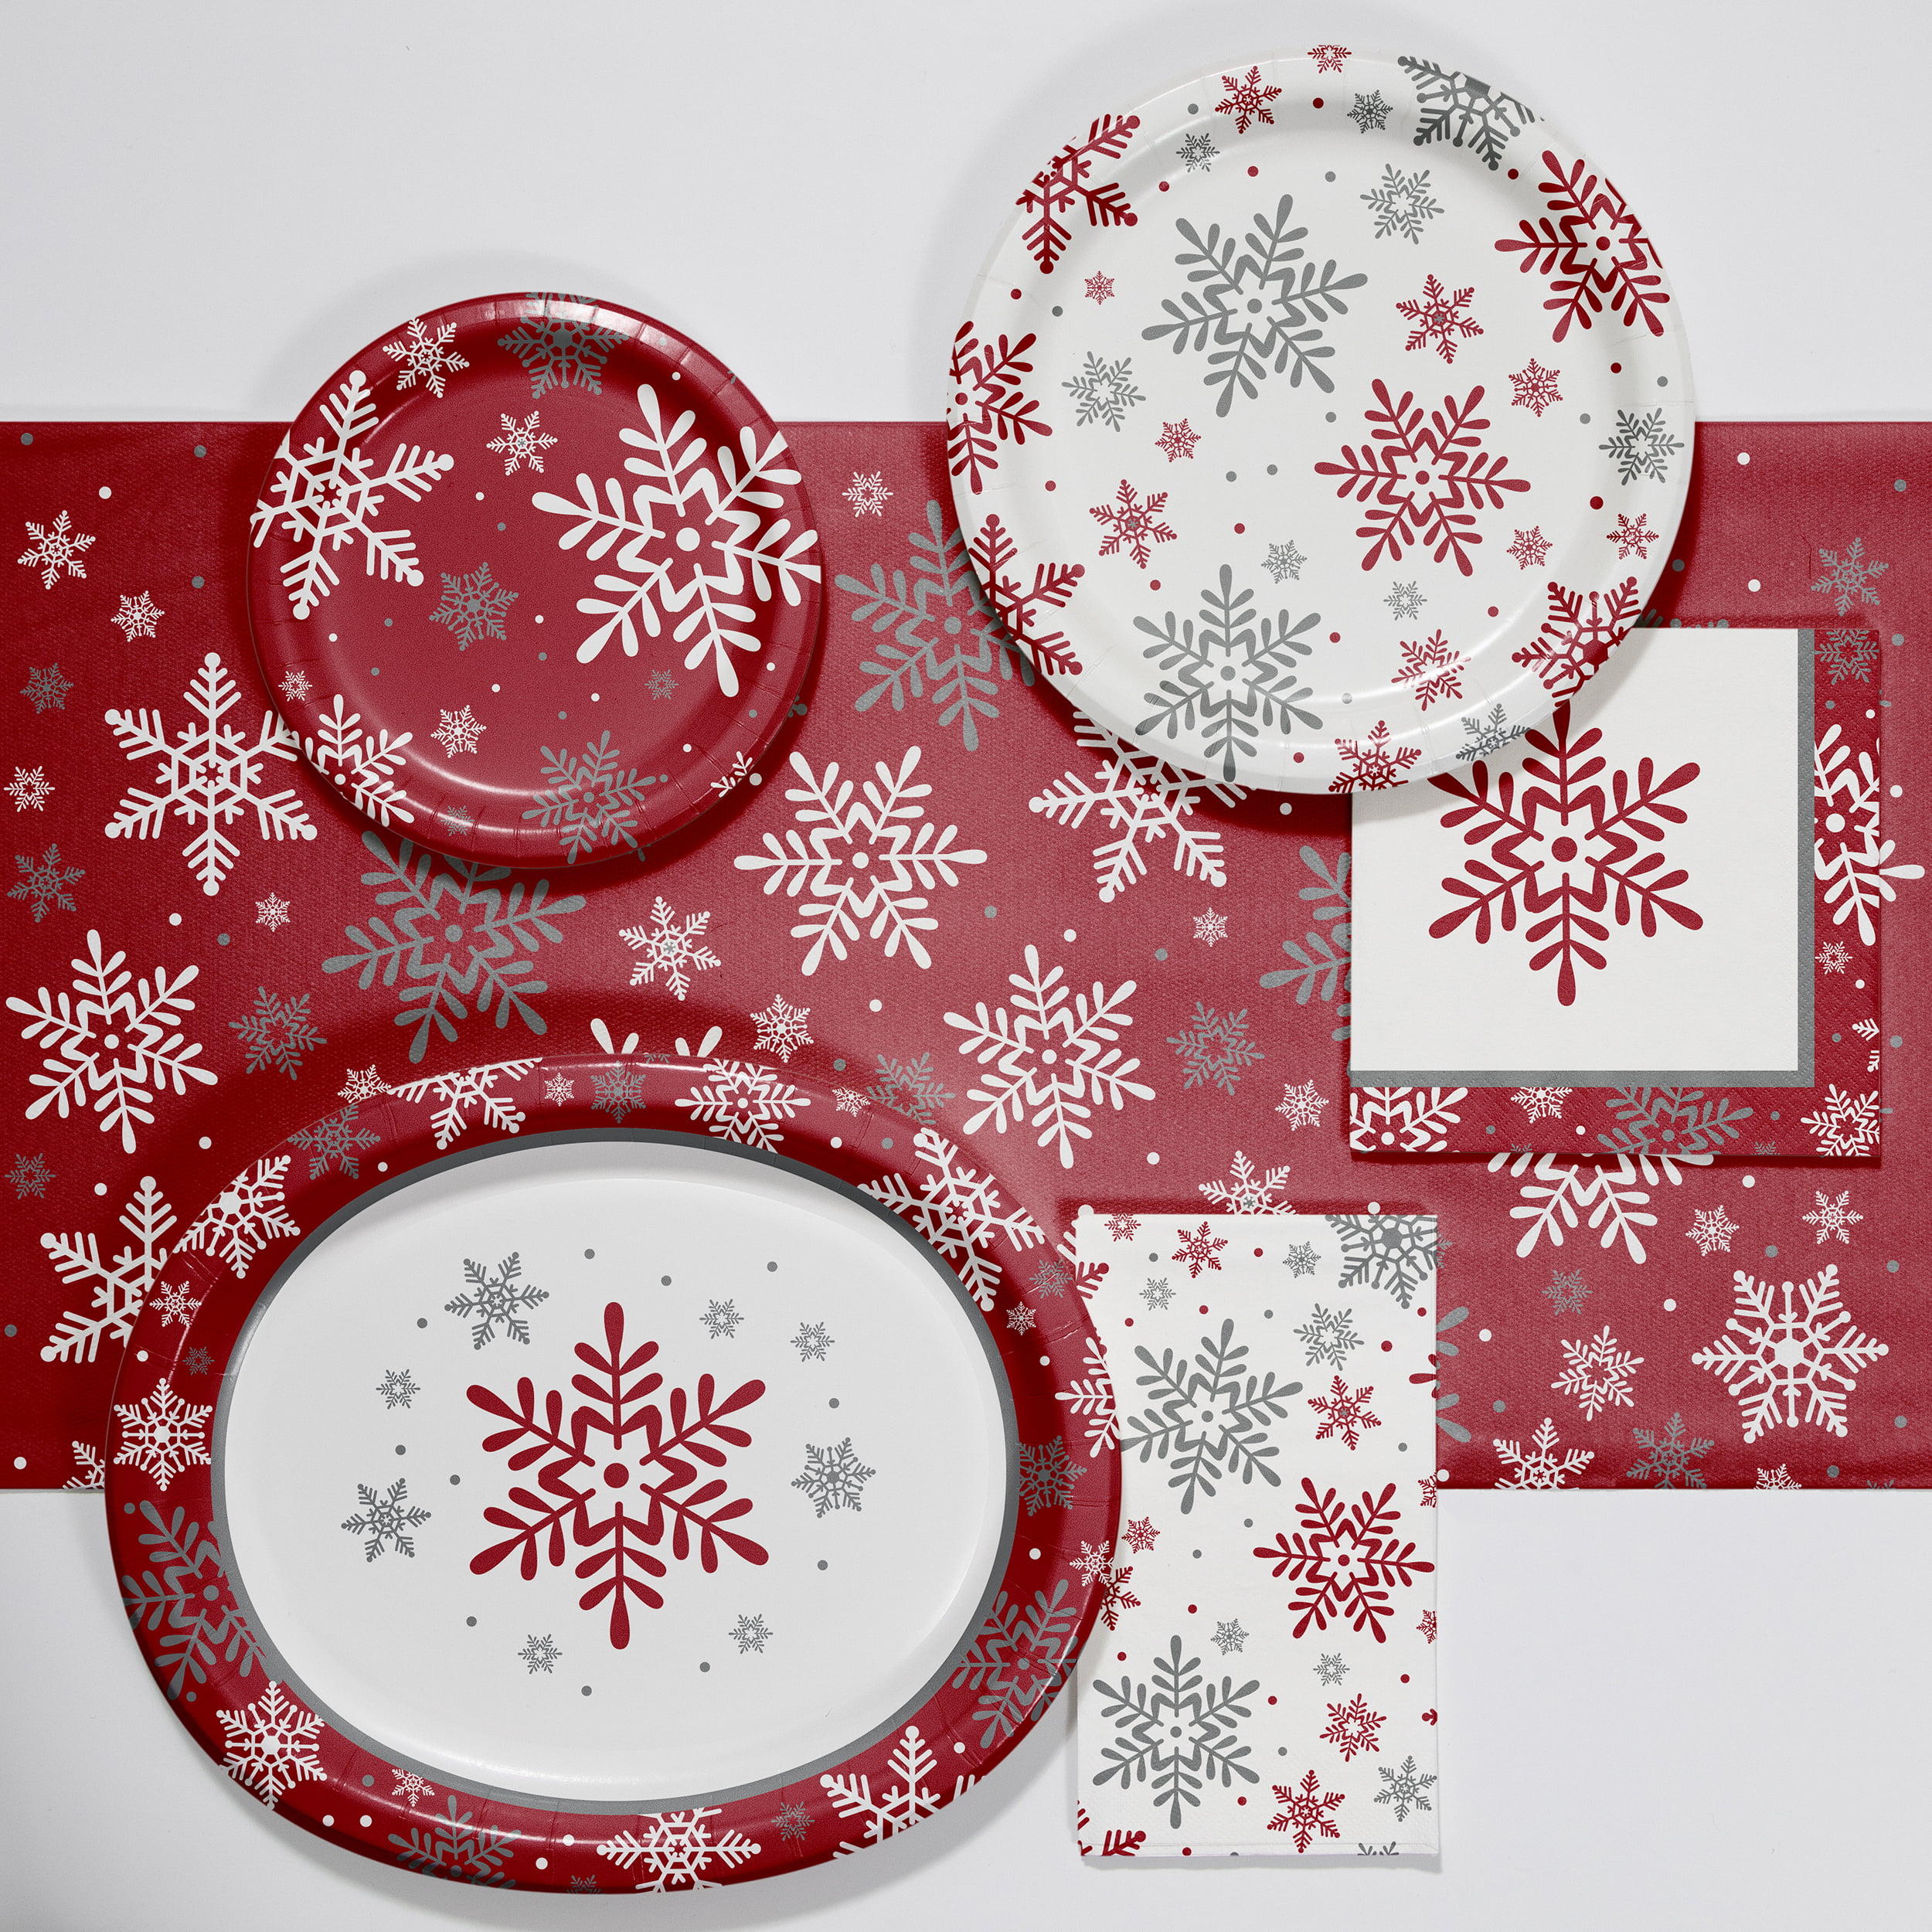 Glad White & Gray Snowflake Pattern 10 Premium Paper Plates, 20